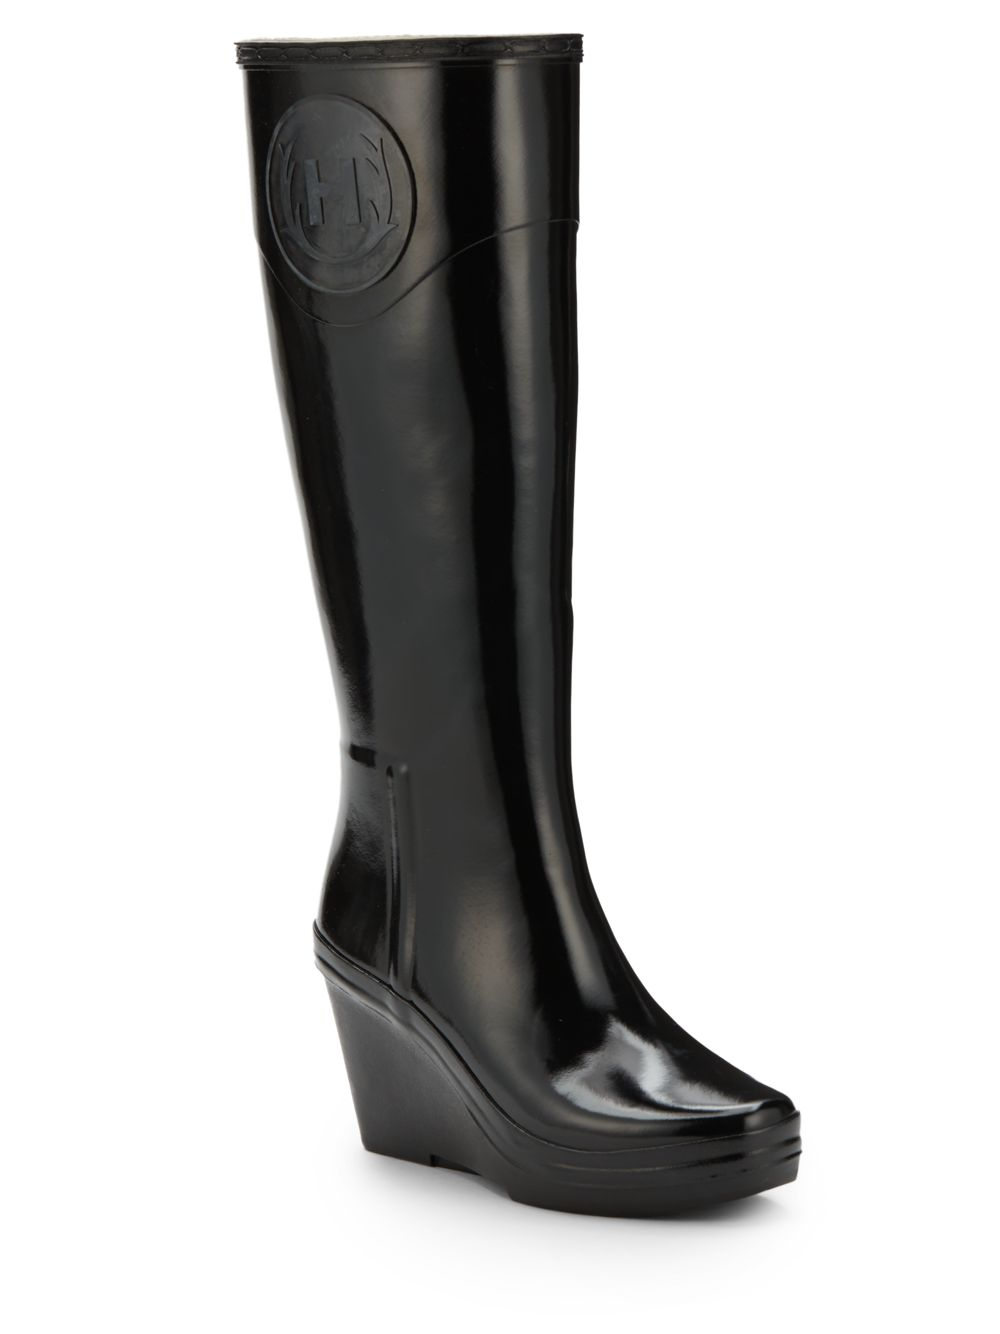 HUNTER Wedge Rain Boots in Black | Lyst